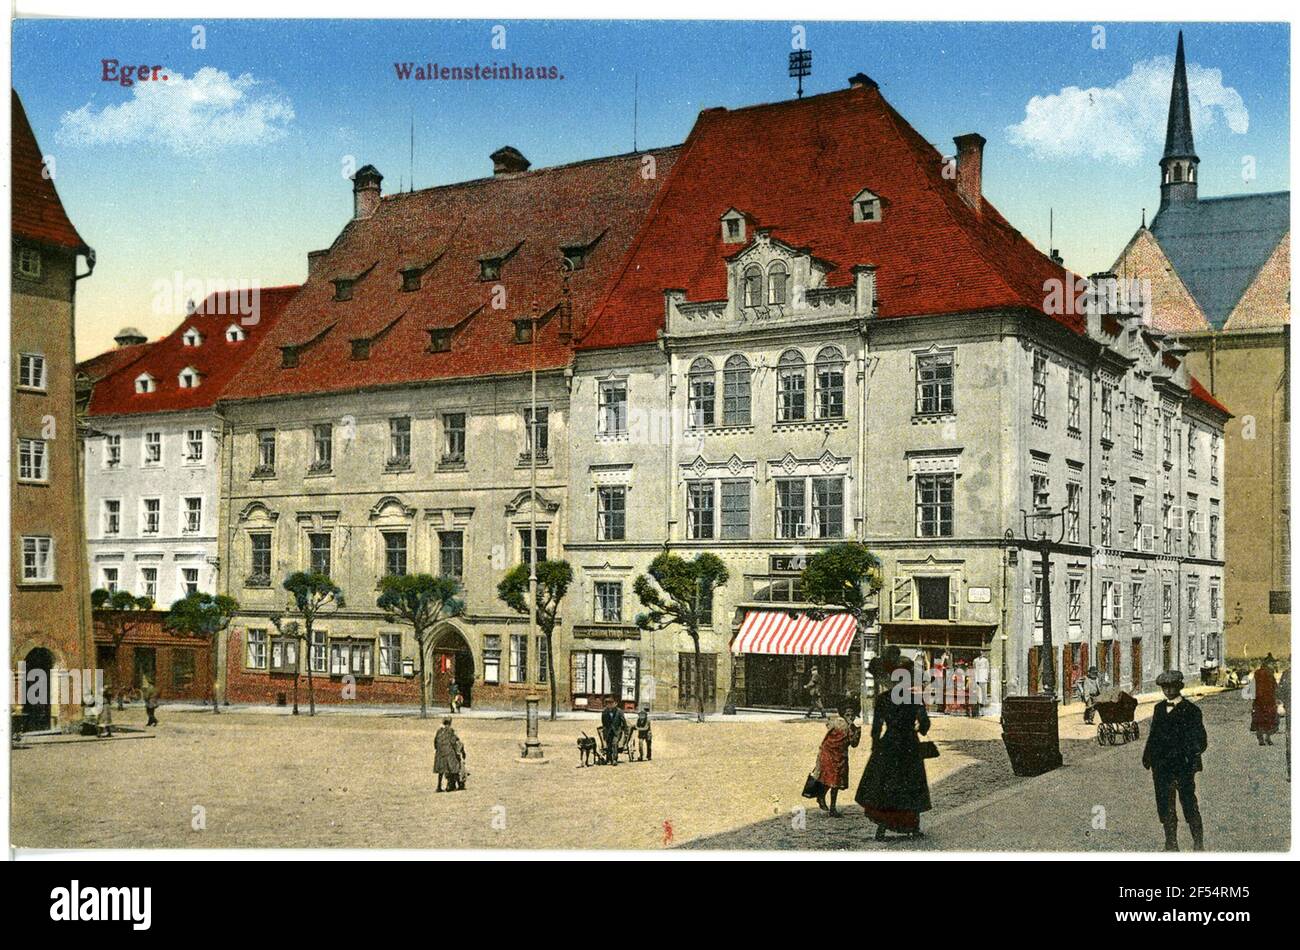 Wallensteinhaus Eger (Bohemia). Townhouse (Wallensteinhaus, Pachelbelhaus) Stock Photo